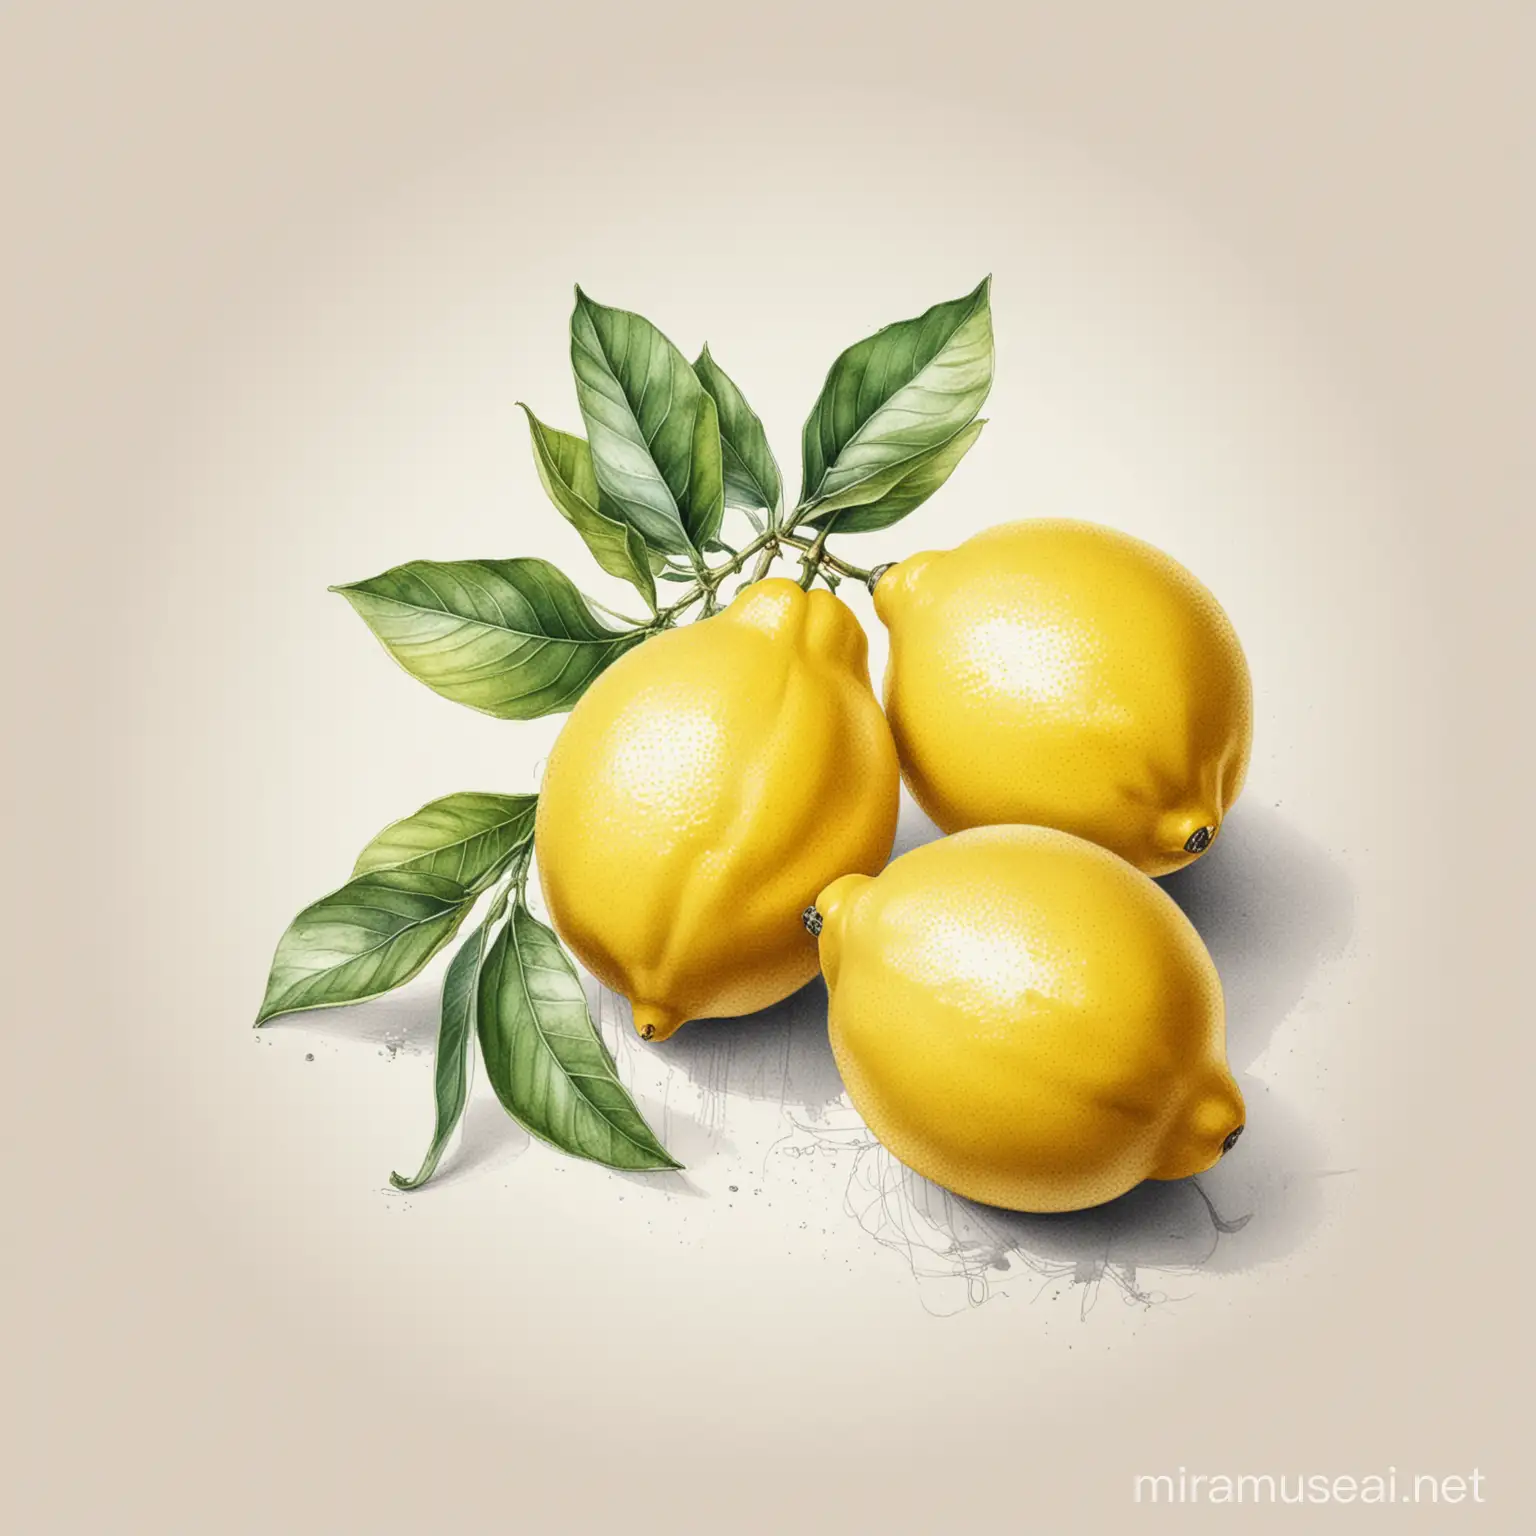 3 lemons, sketch, white background 
﻿